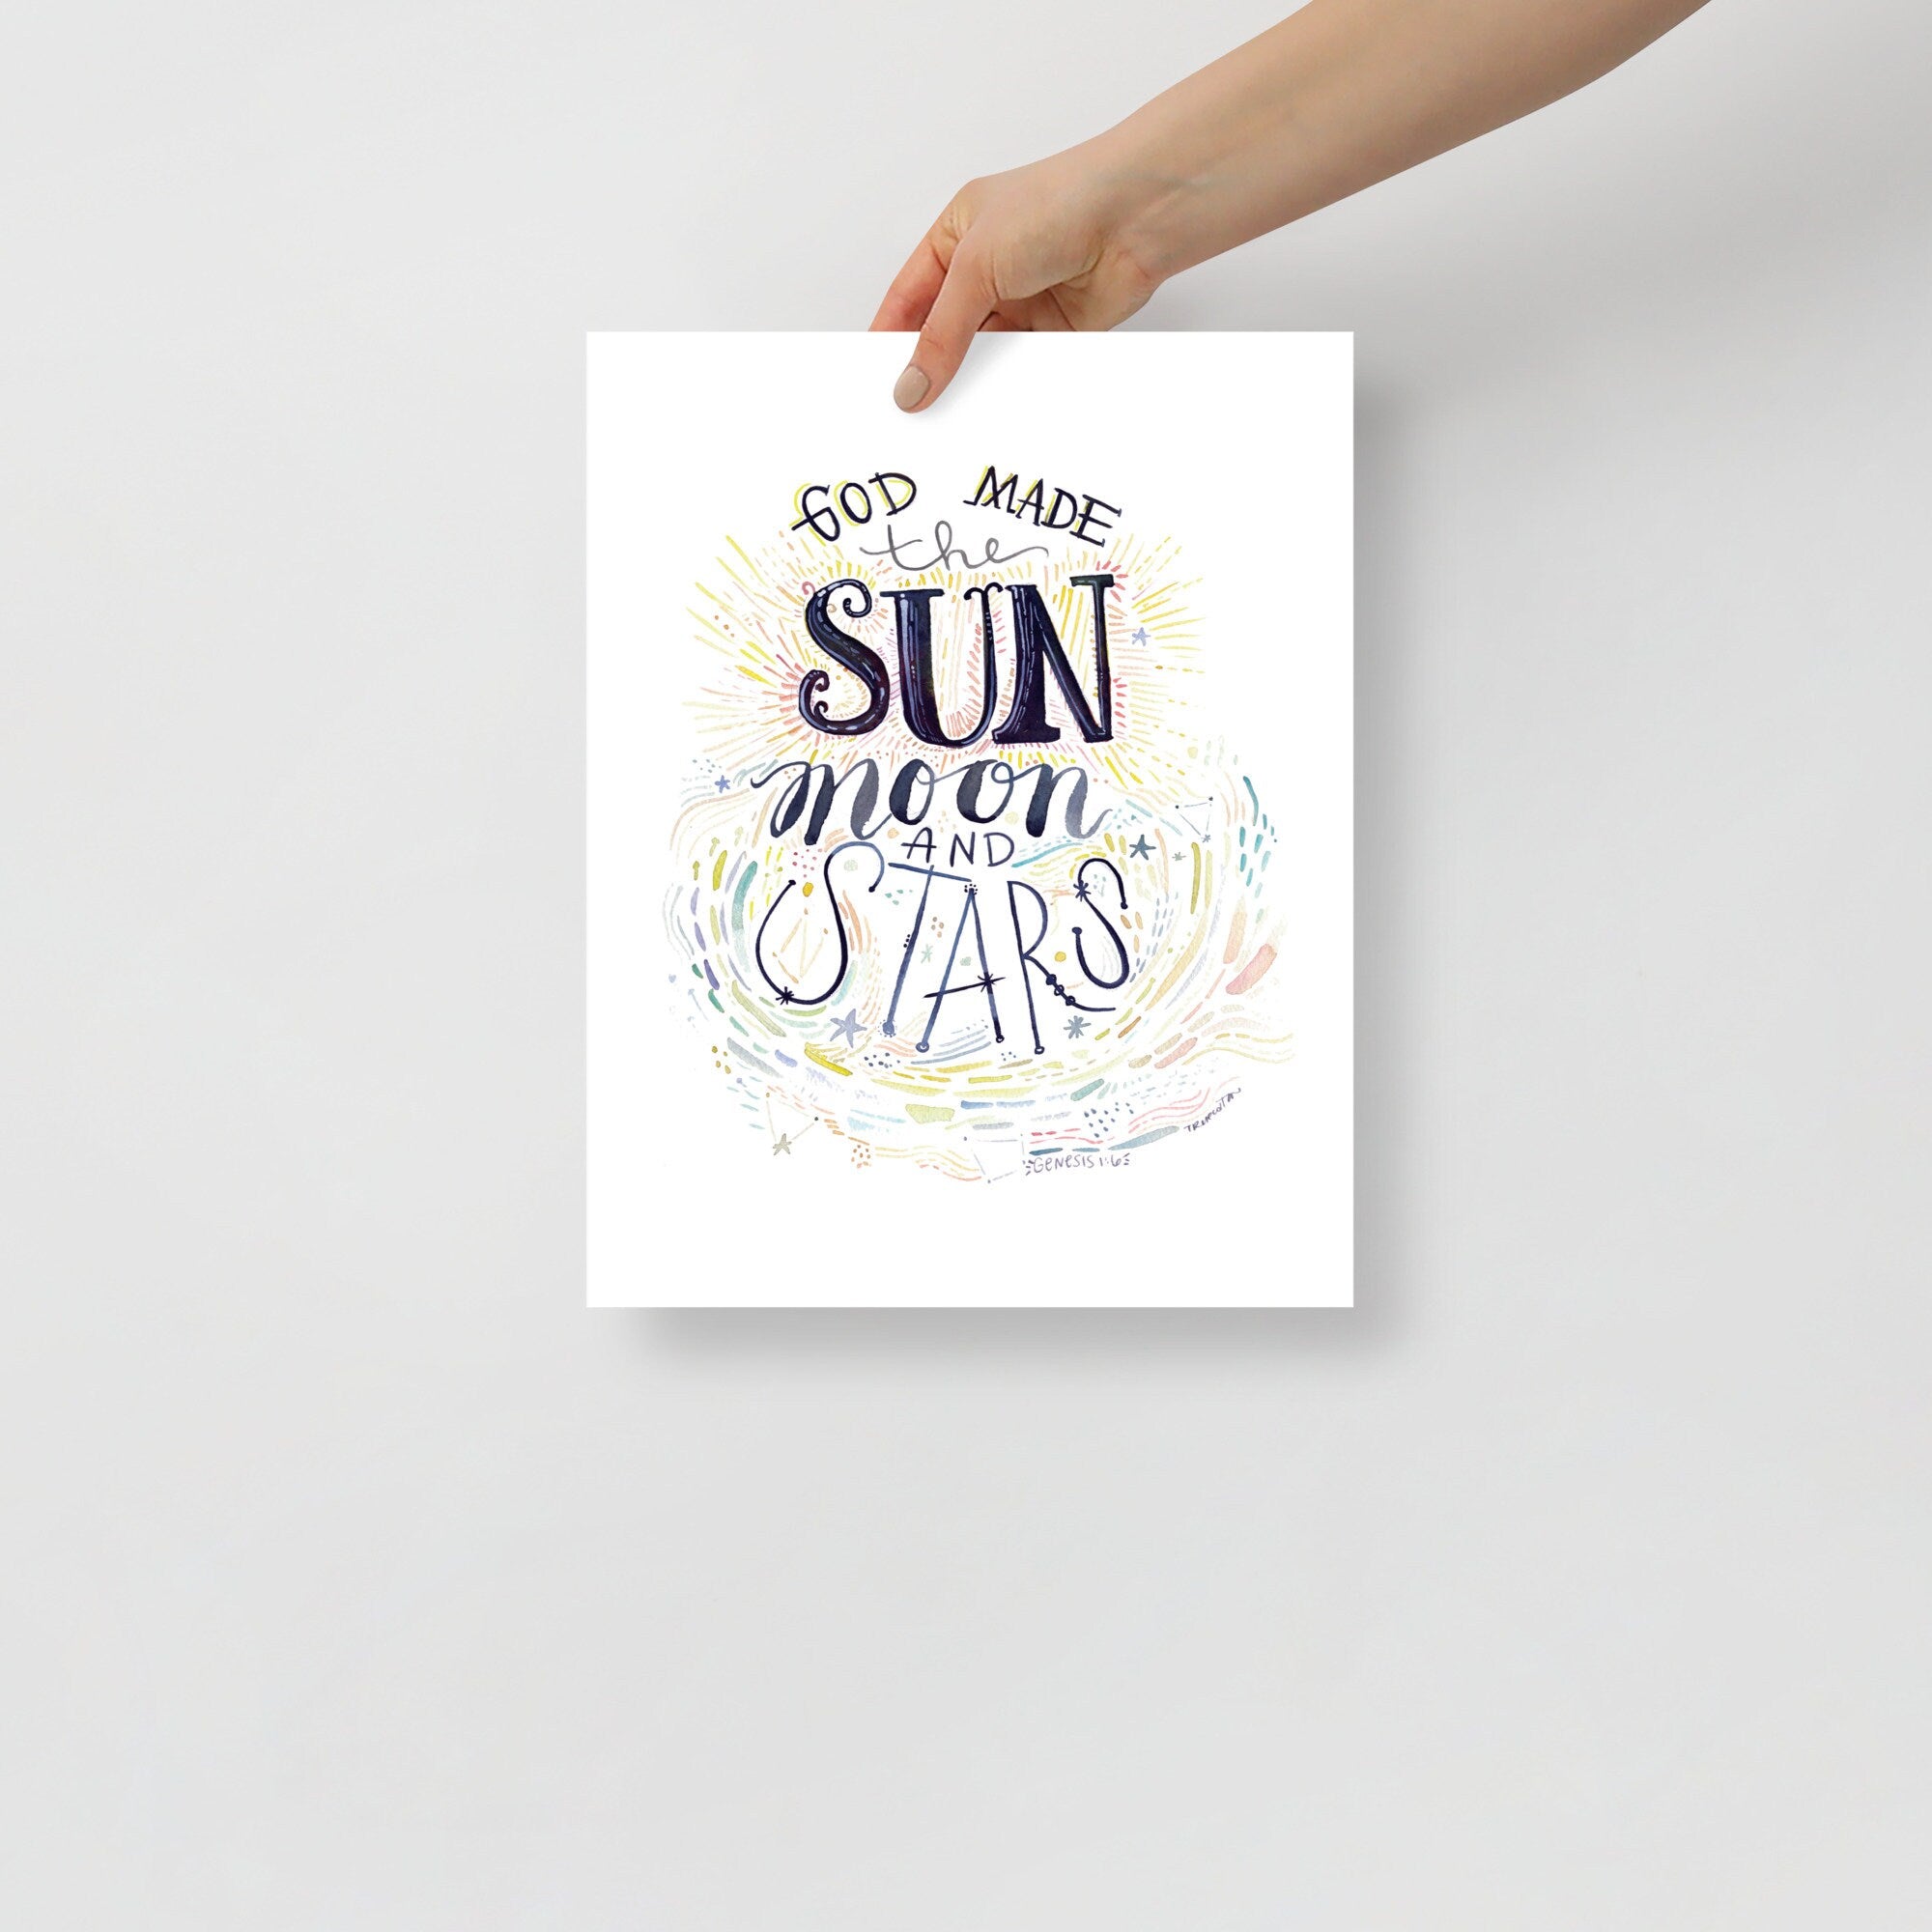 God made the sun moon & stars | Genesis 1:6 Fine Art Poster Print